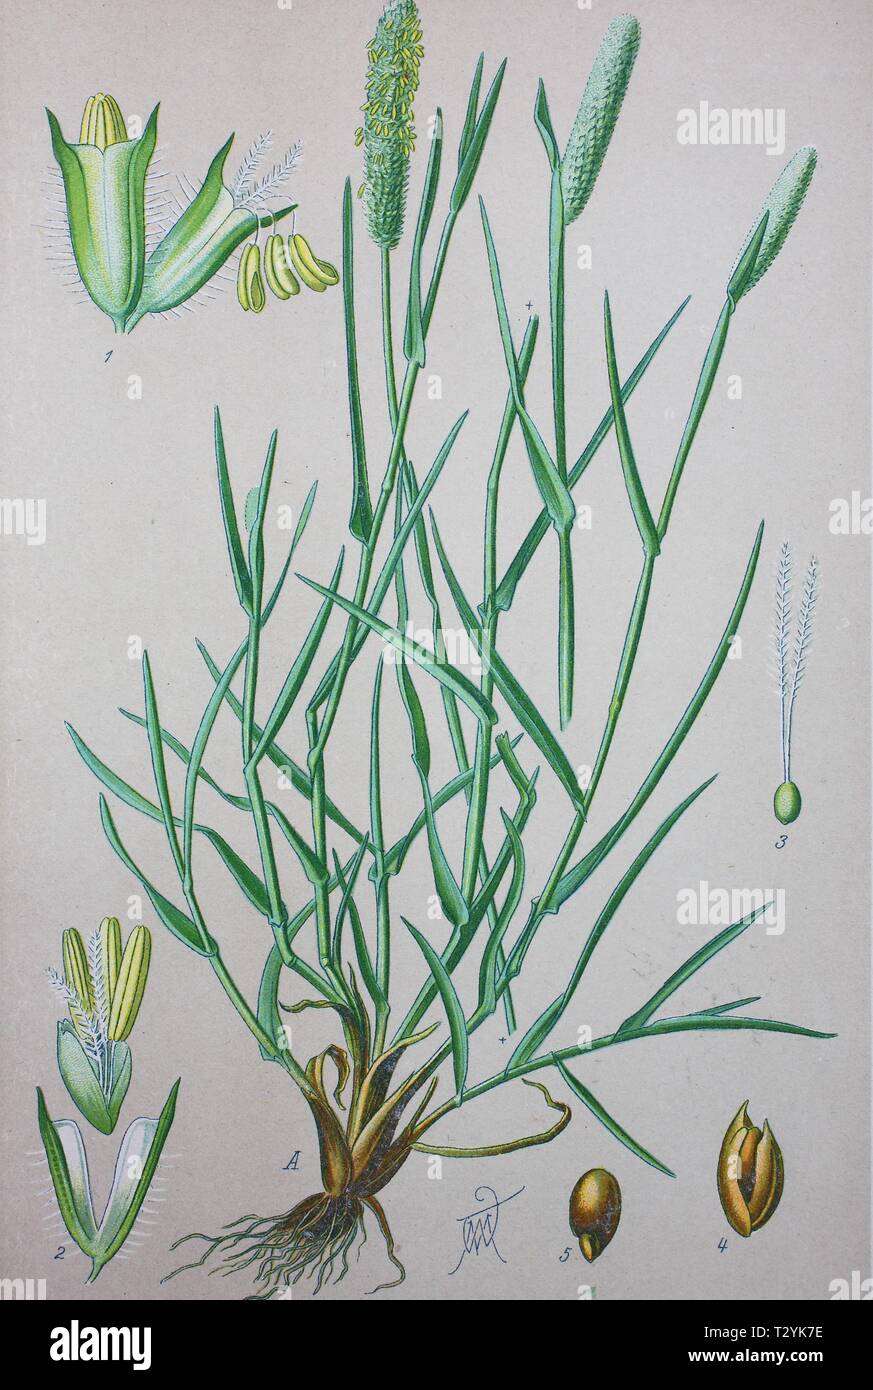 Timothy-grass (Phleum pratense), historical illustration from 1885, Germany Stock Photo